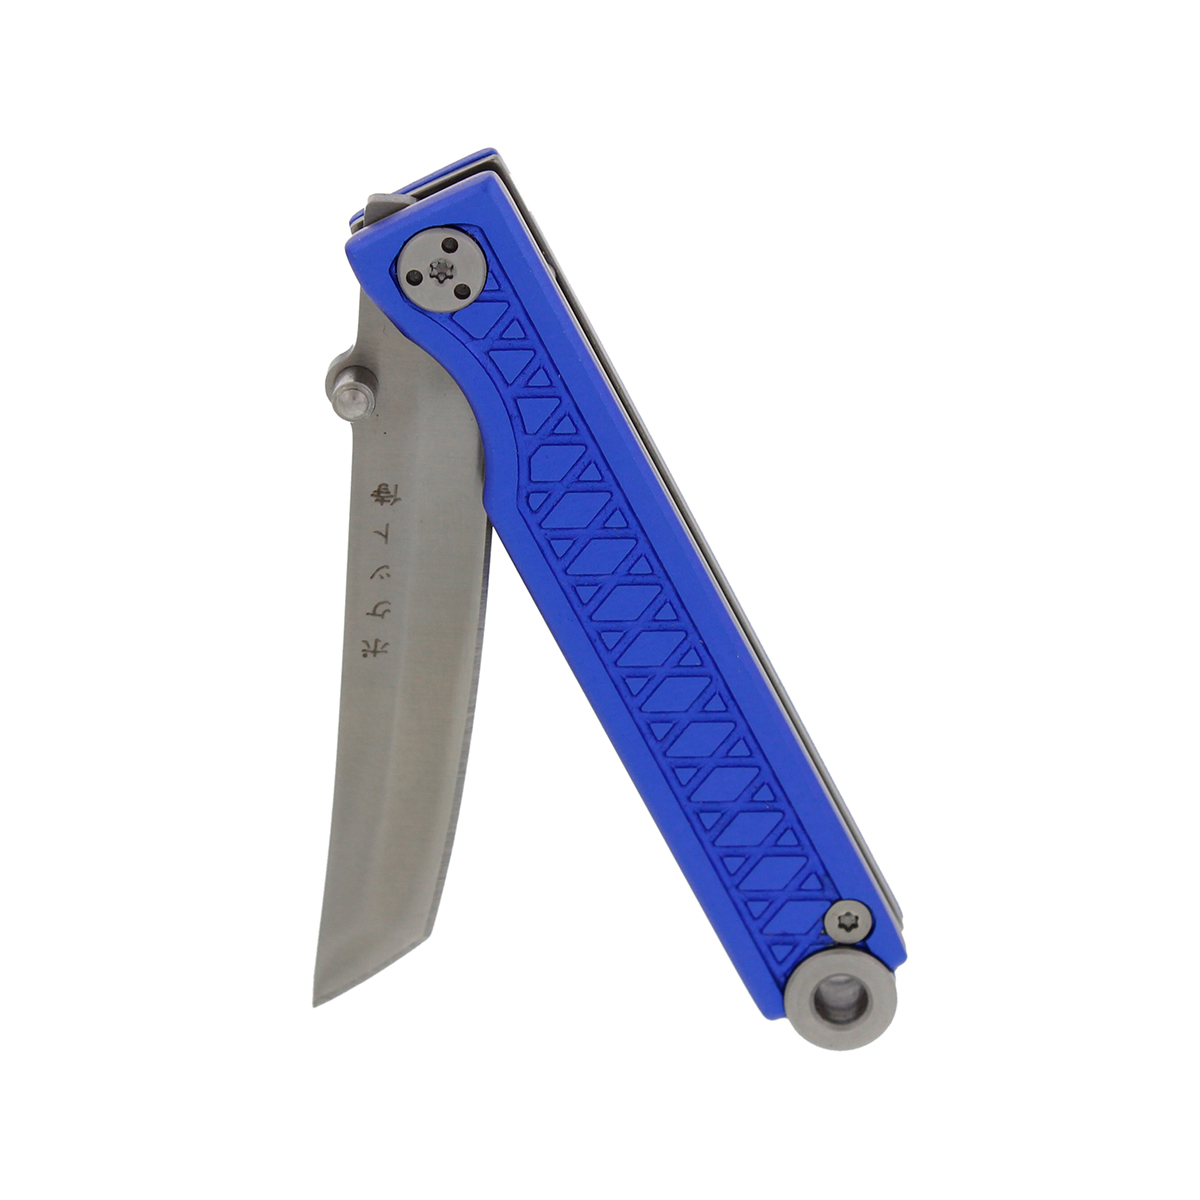 Pocket Samurai Keychain Knife - Blue